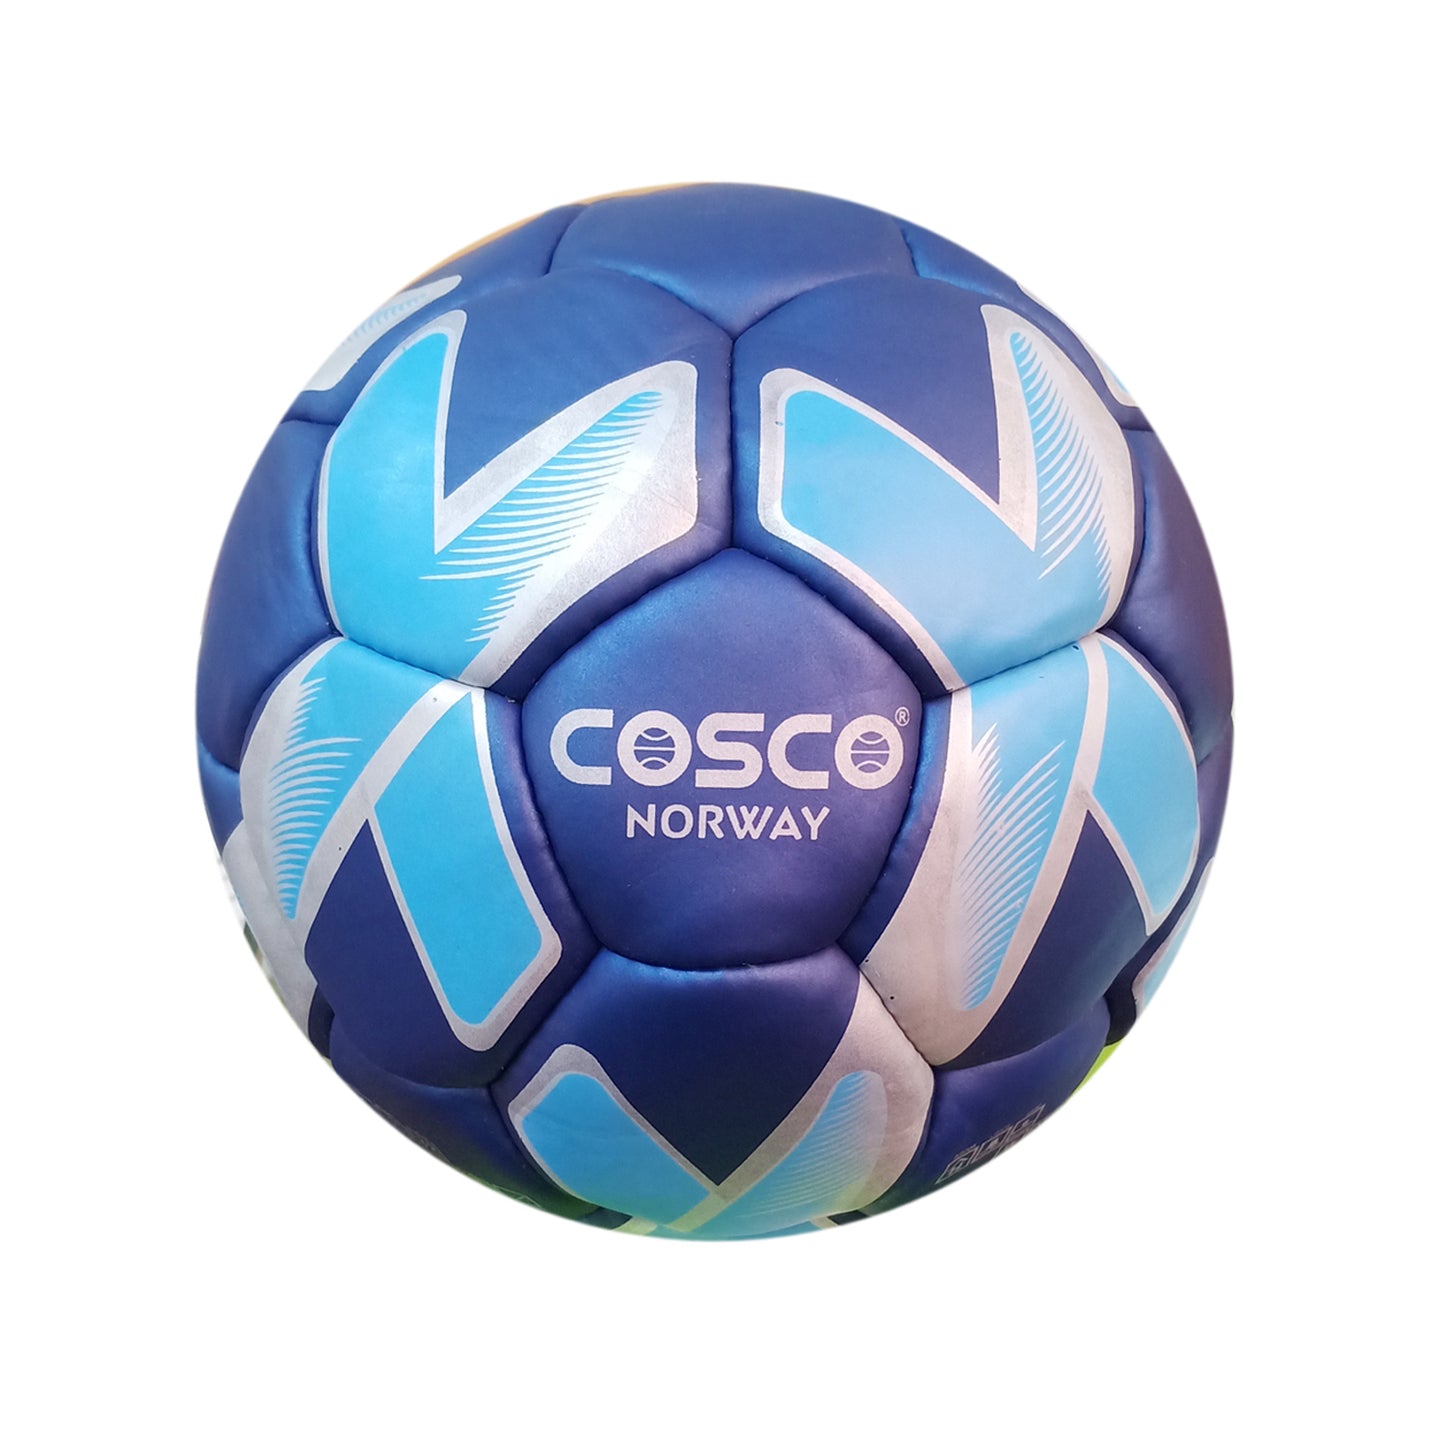 Cosco Norway Football , Blue/Silver - Size 4 - Best Price online Prokicksports.com